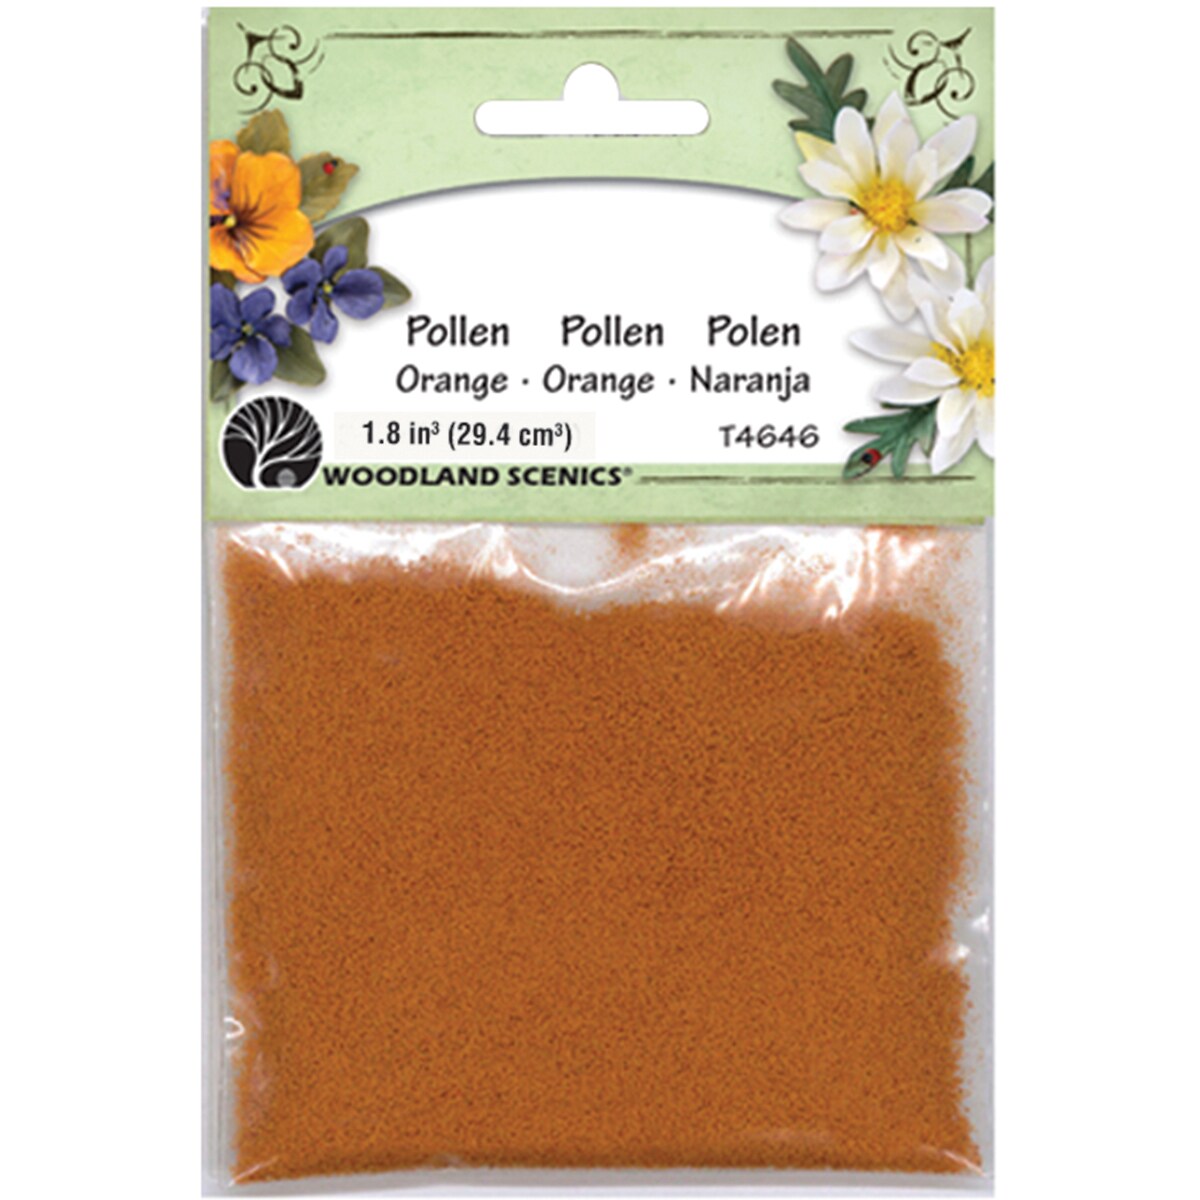 Woodland Scenics Paper Pollen 1oz -Orange